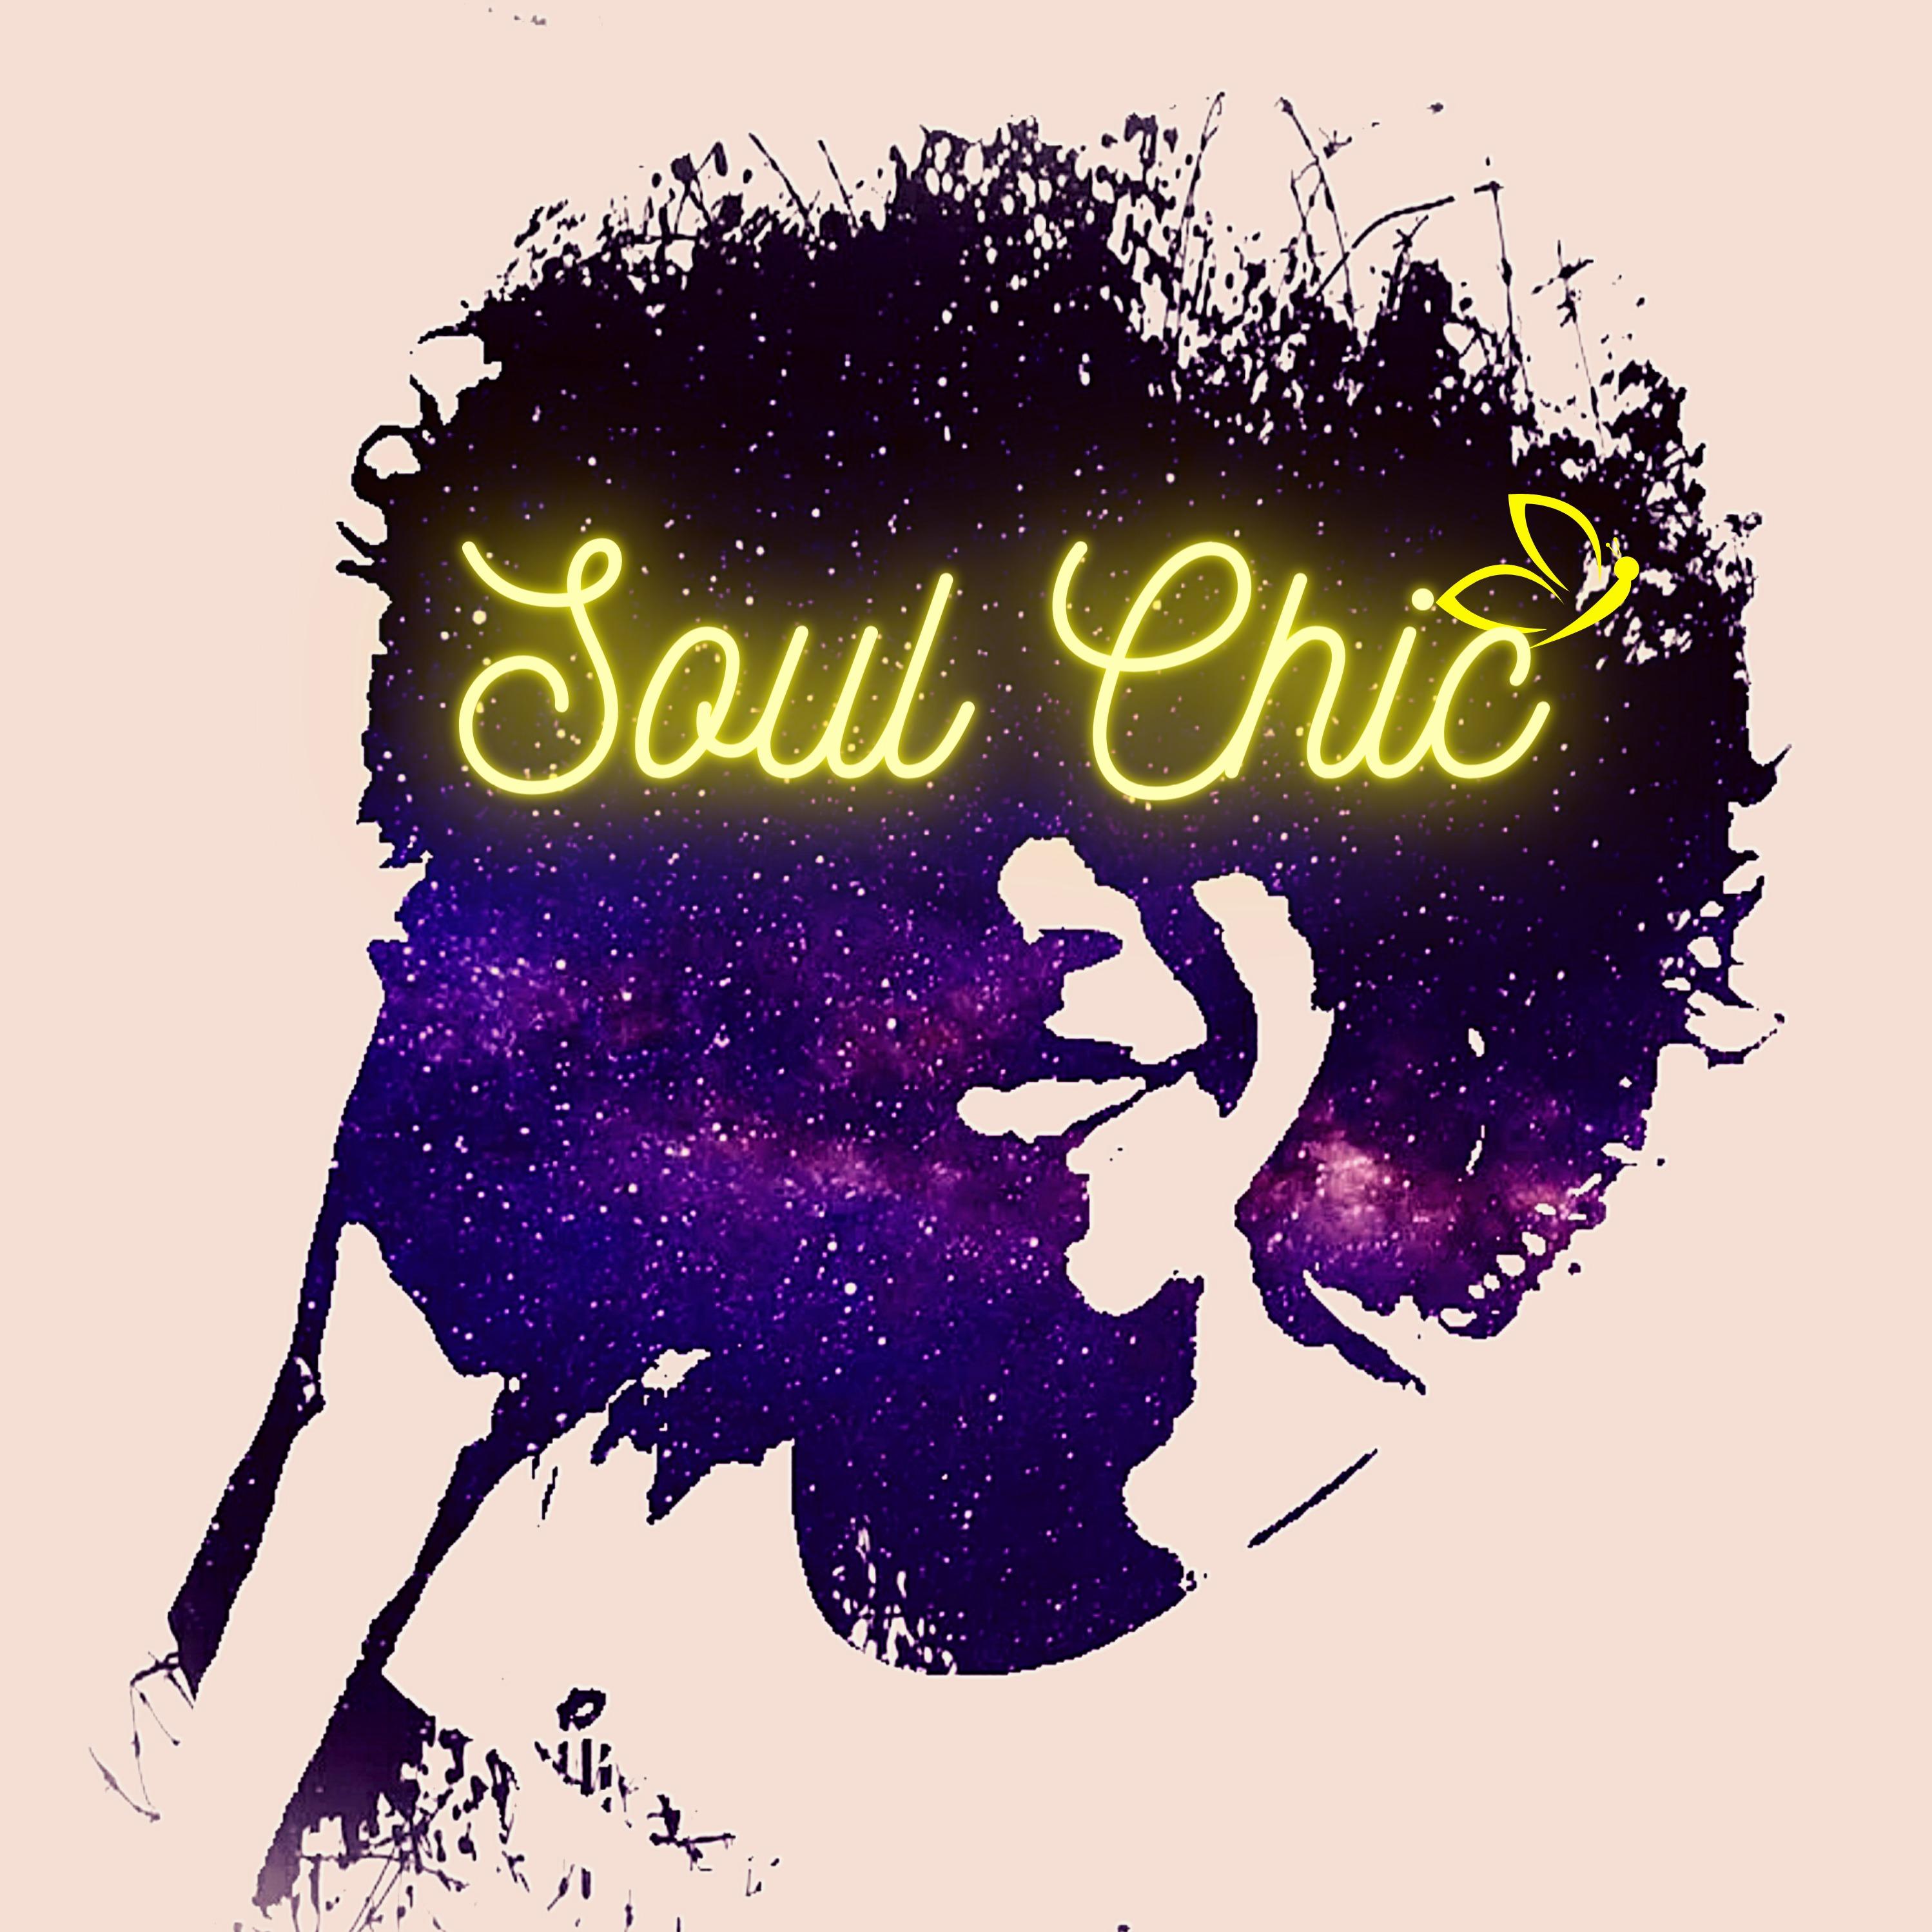 Soul Chic